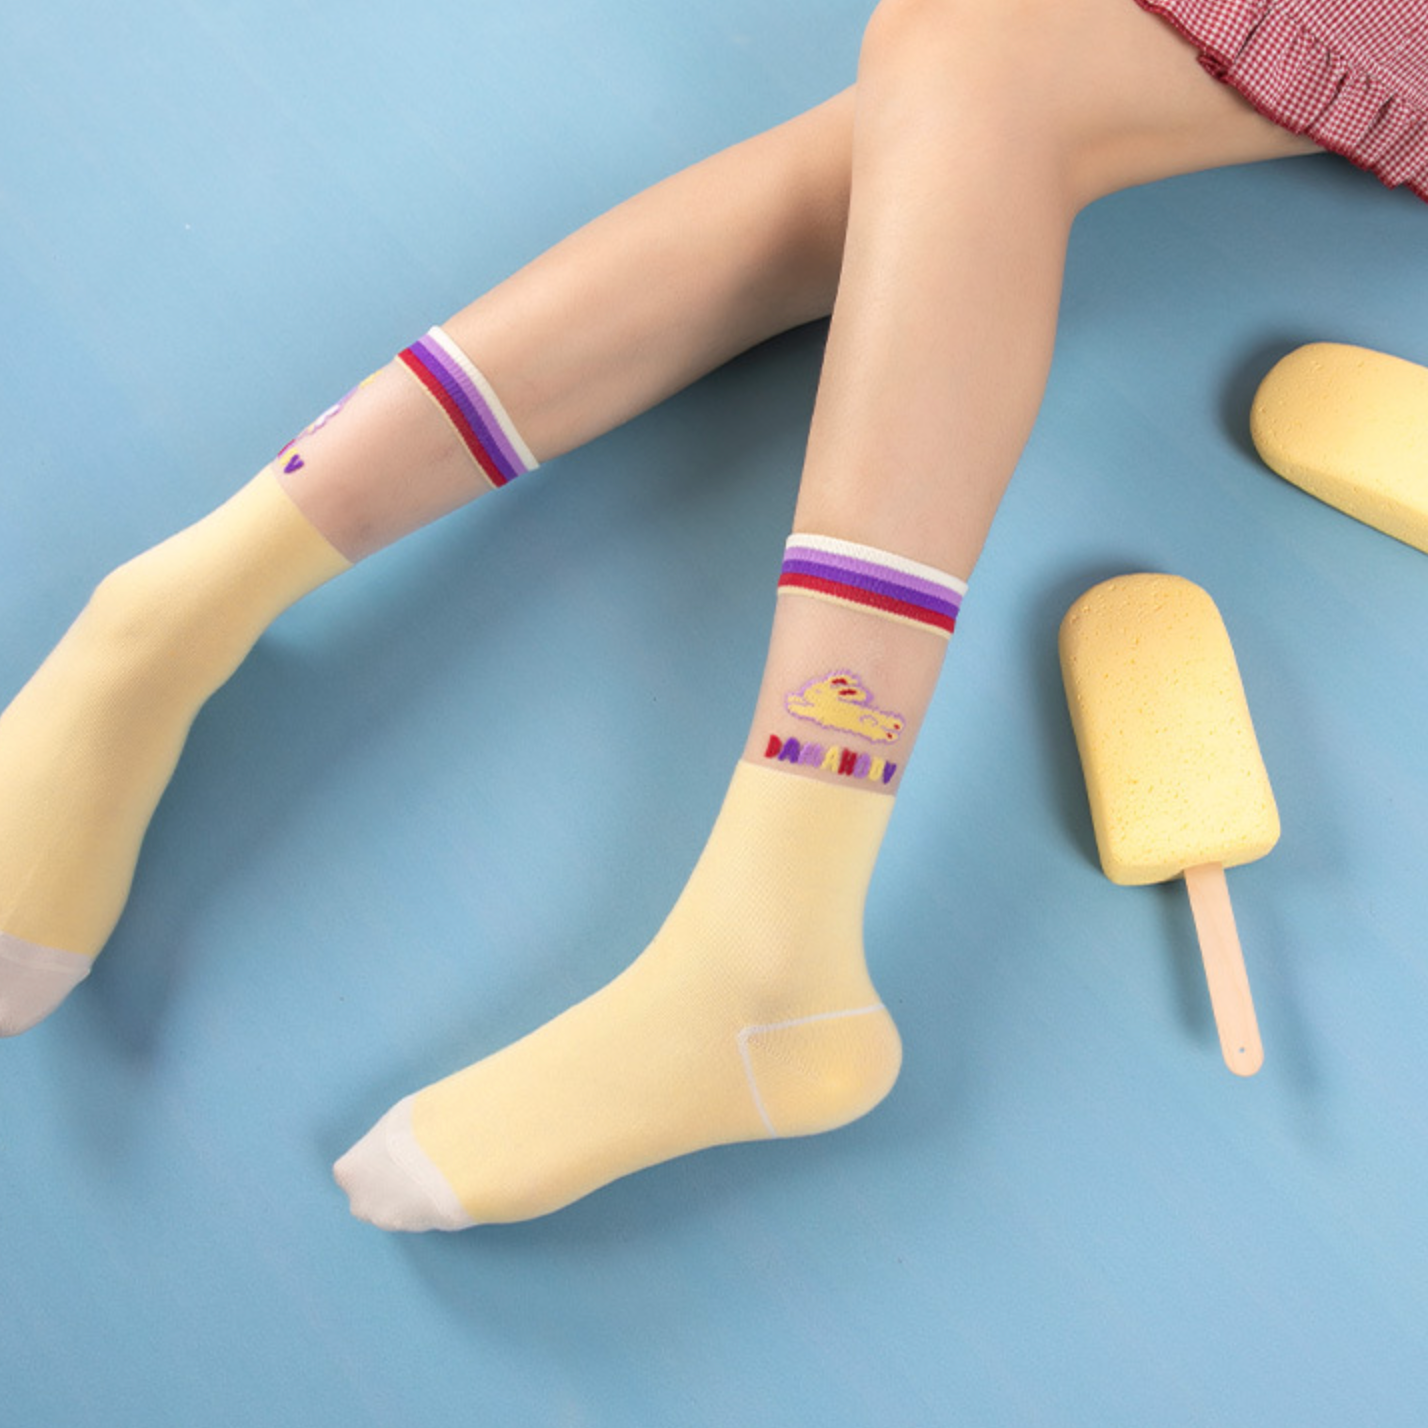 Sanrio Yellow Socks